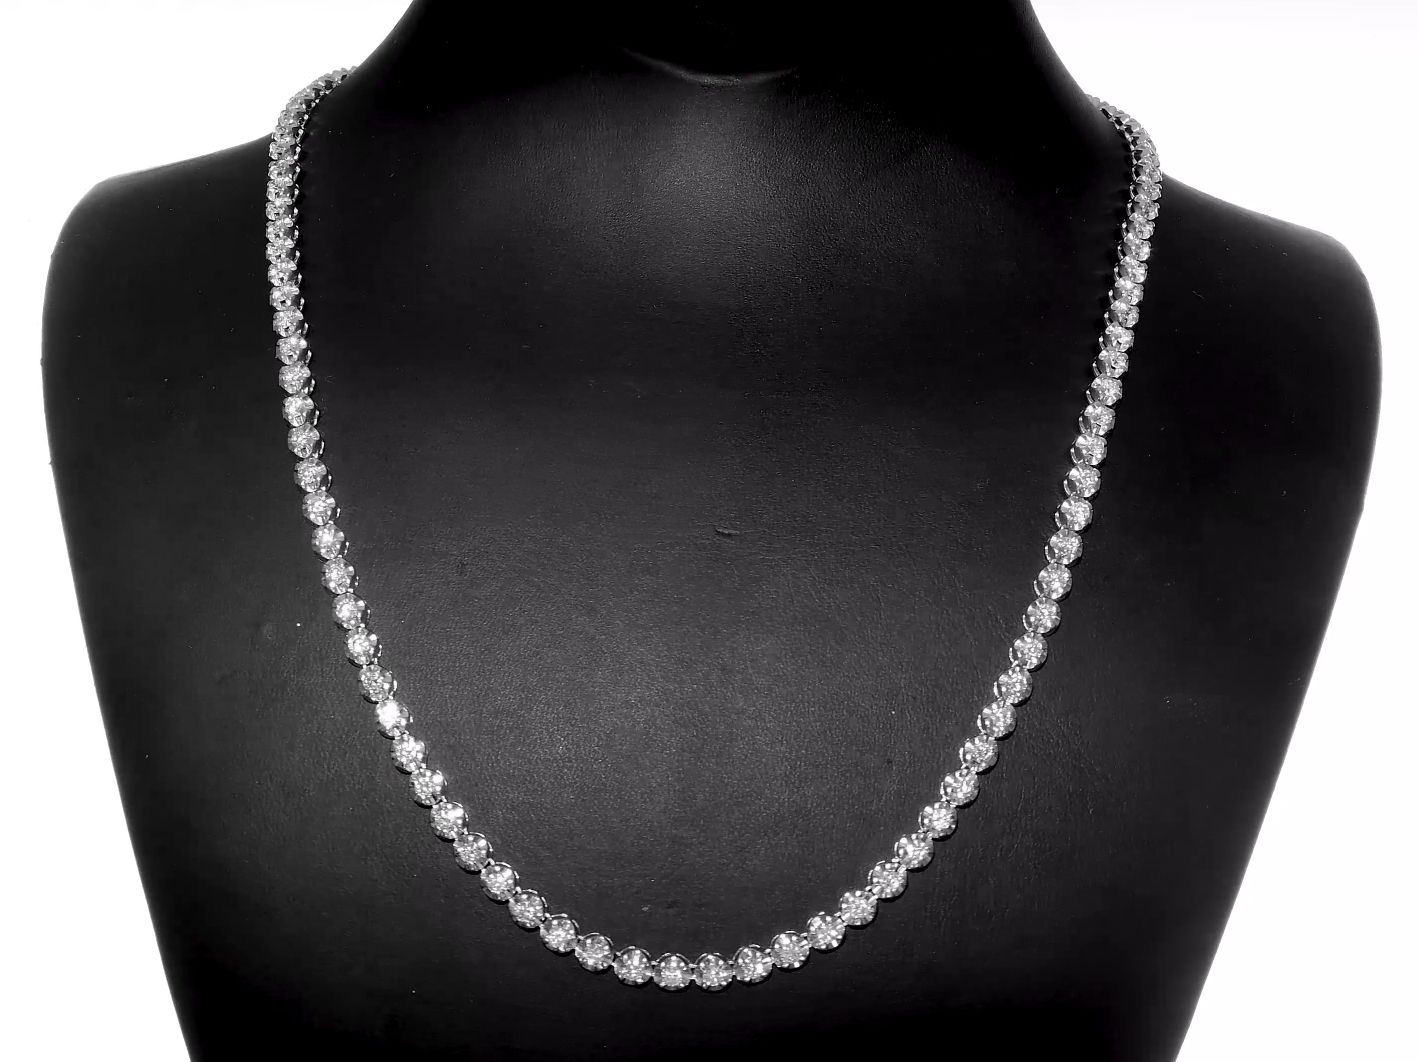 5.75 carat, Tennis Necklace, 14K white Gold